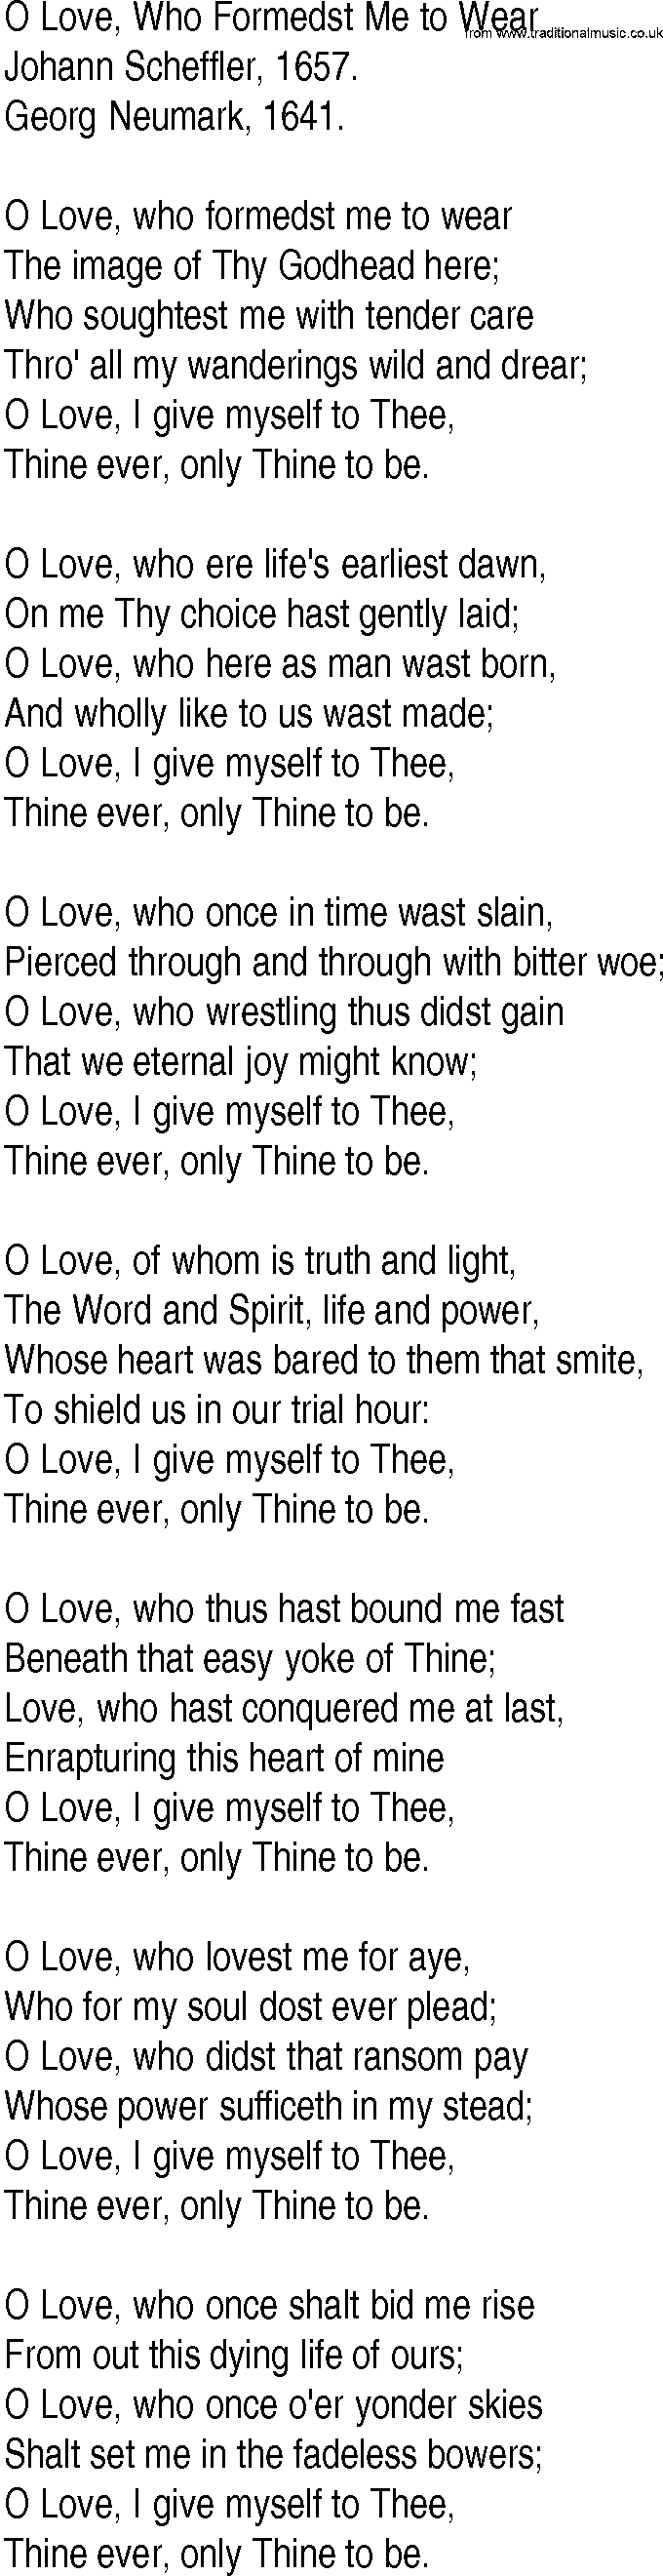 Hymn and Gospel Song: O Love, Who Formedst Me to Wear by Johann Scheffler lyrics